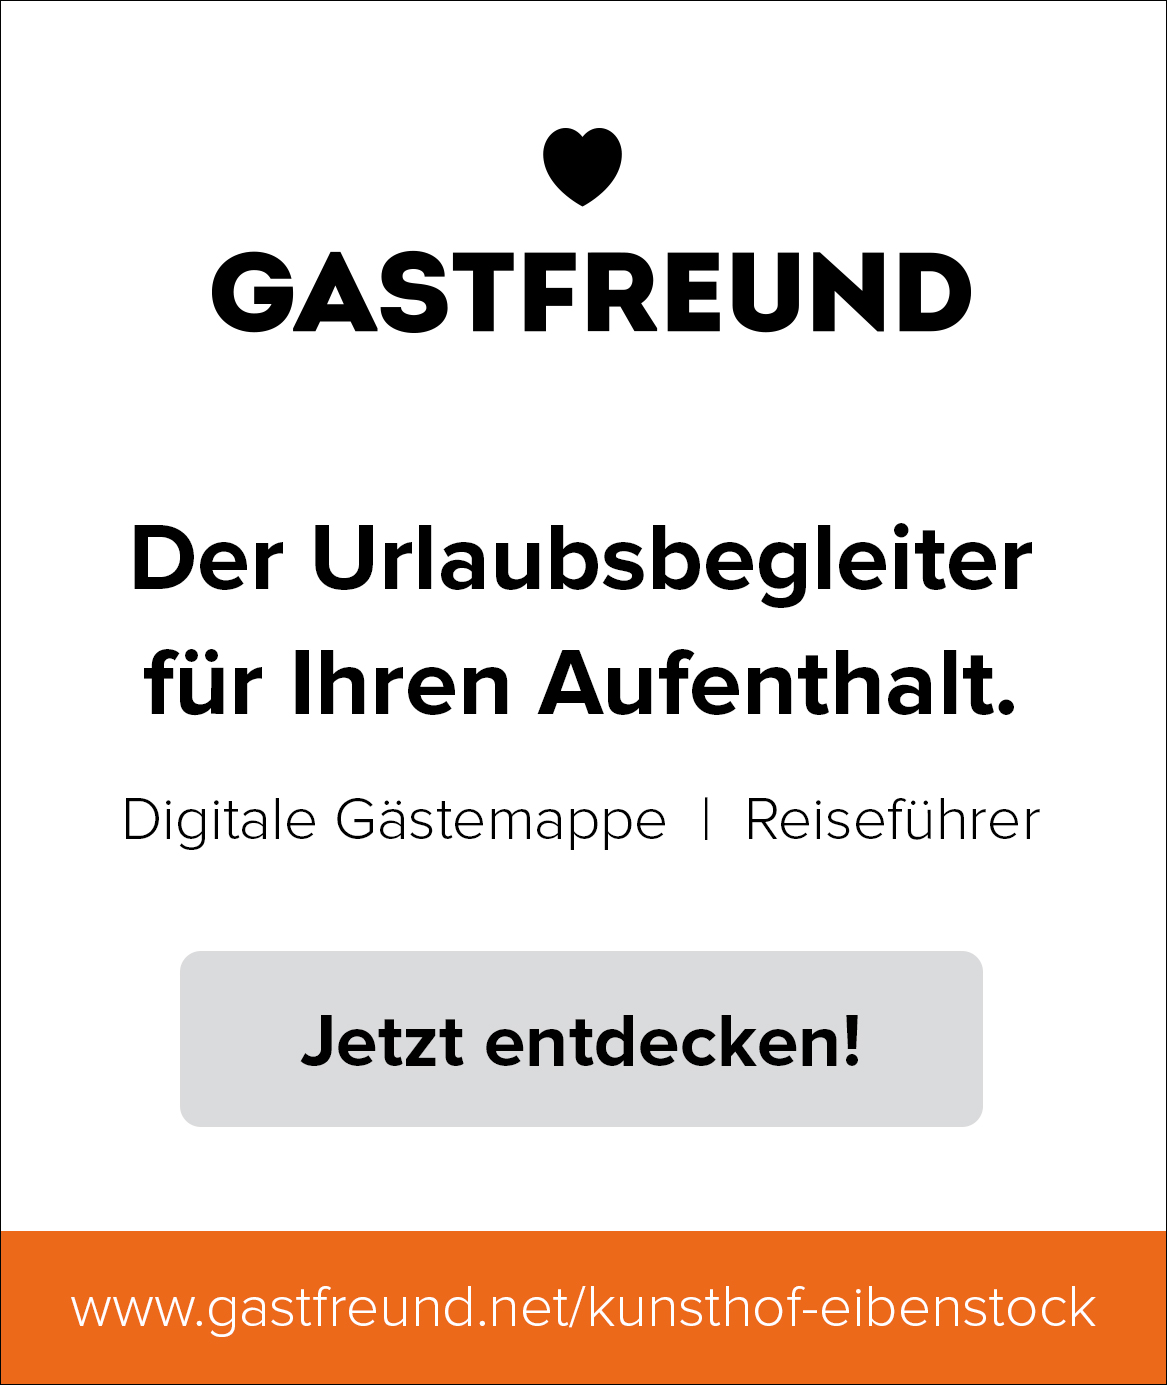 Kunsthof Eibenstock - Gastfreund App + Digitale Gästemappe